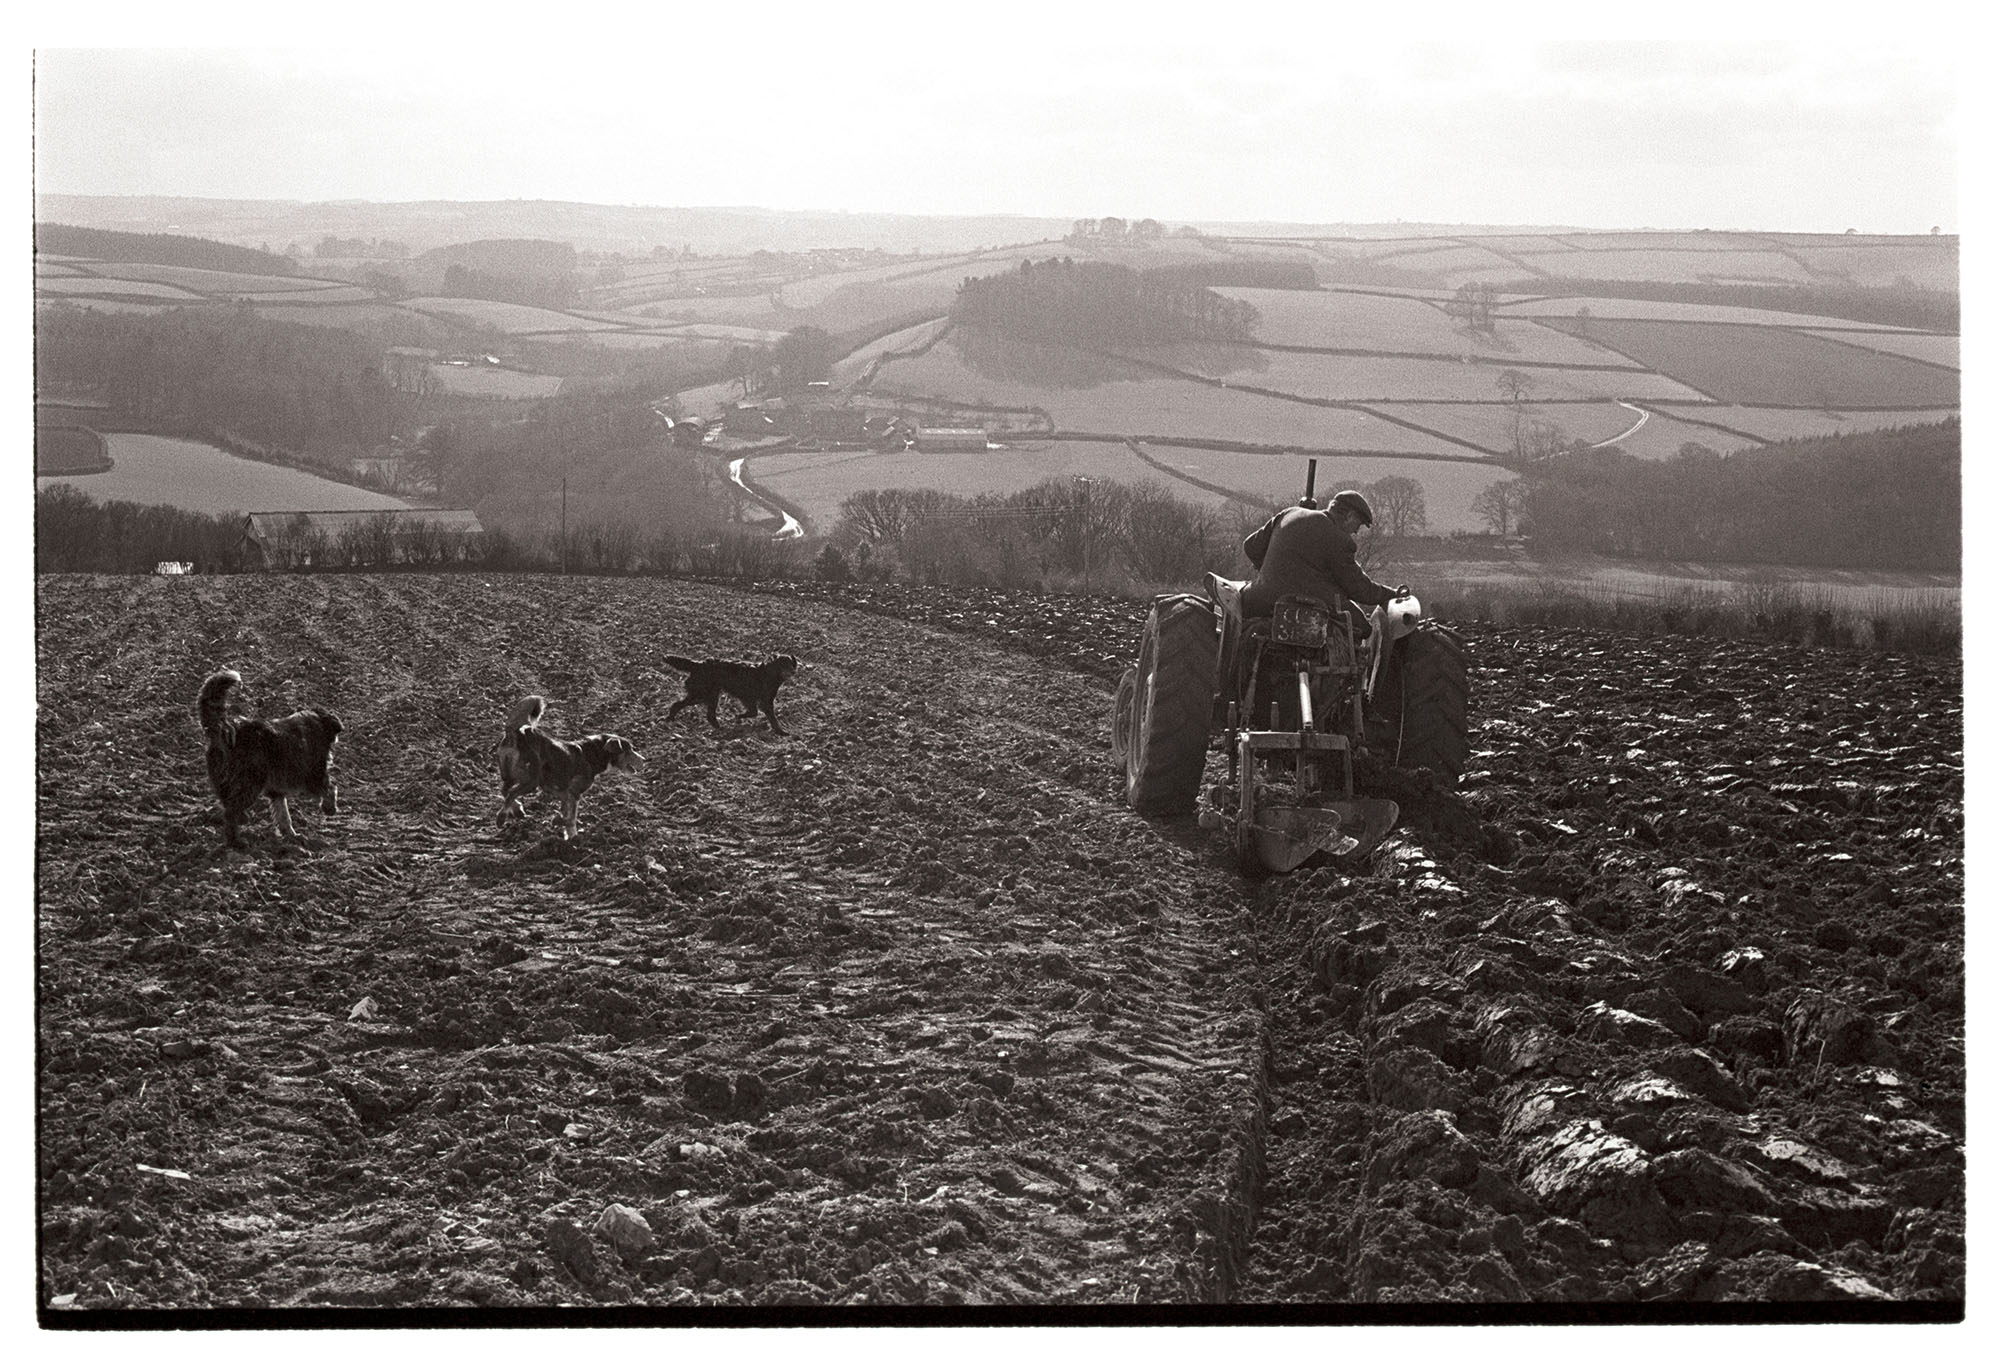 George Ayre ploughing by James Ravilious